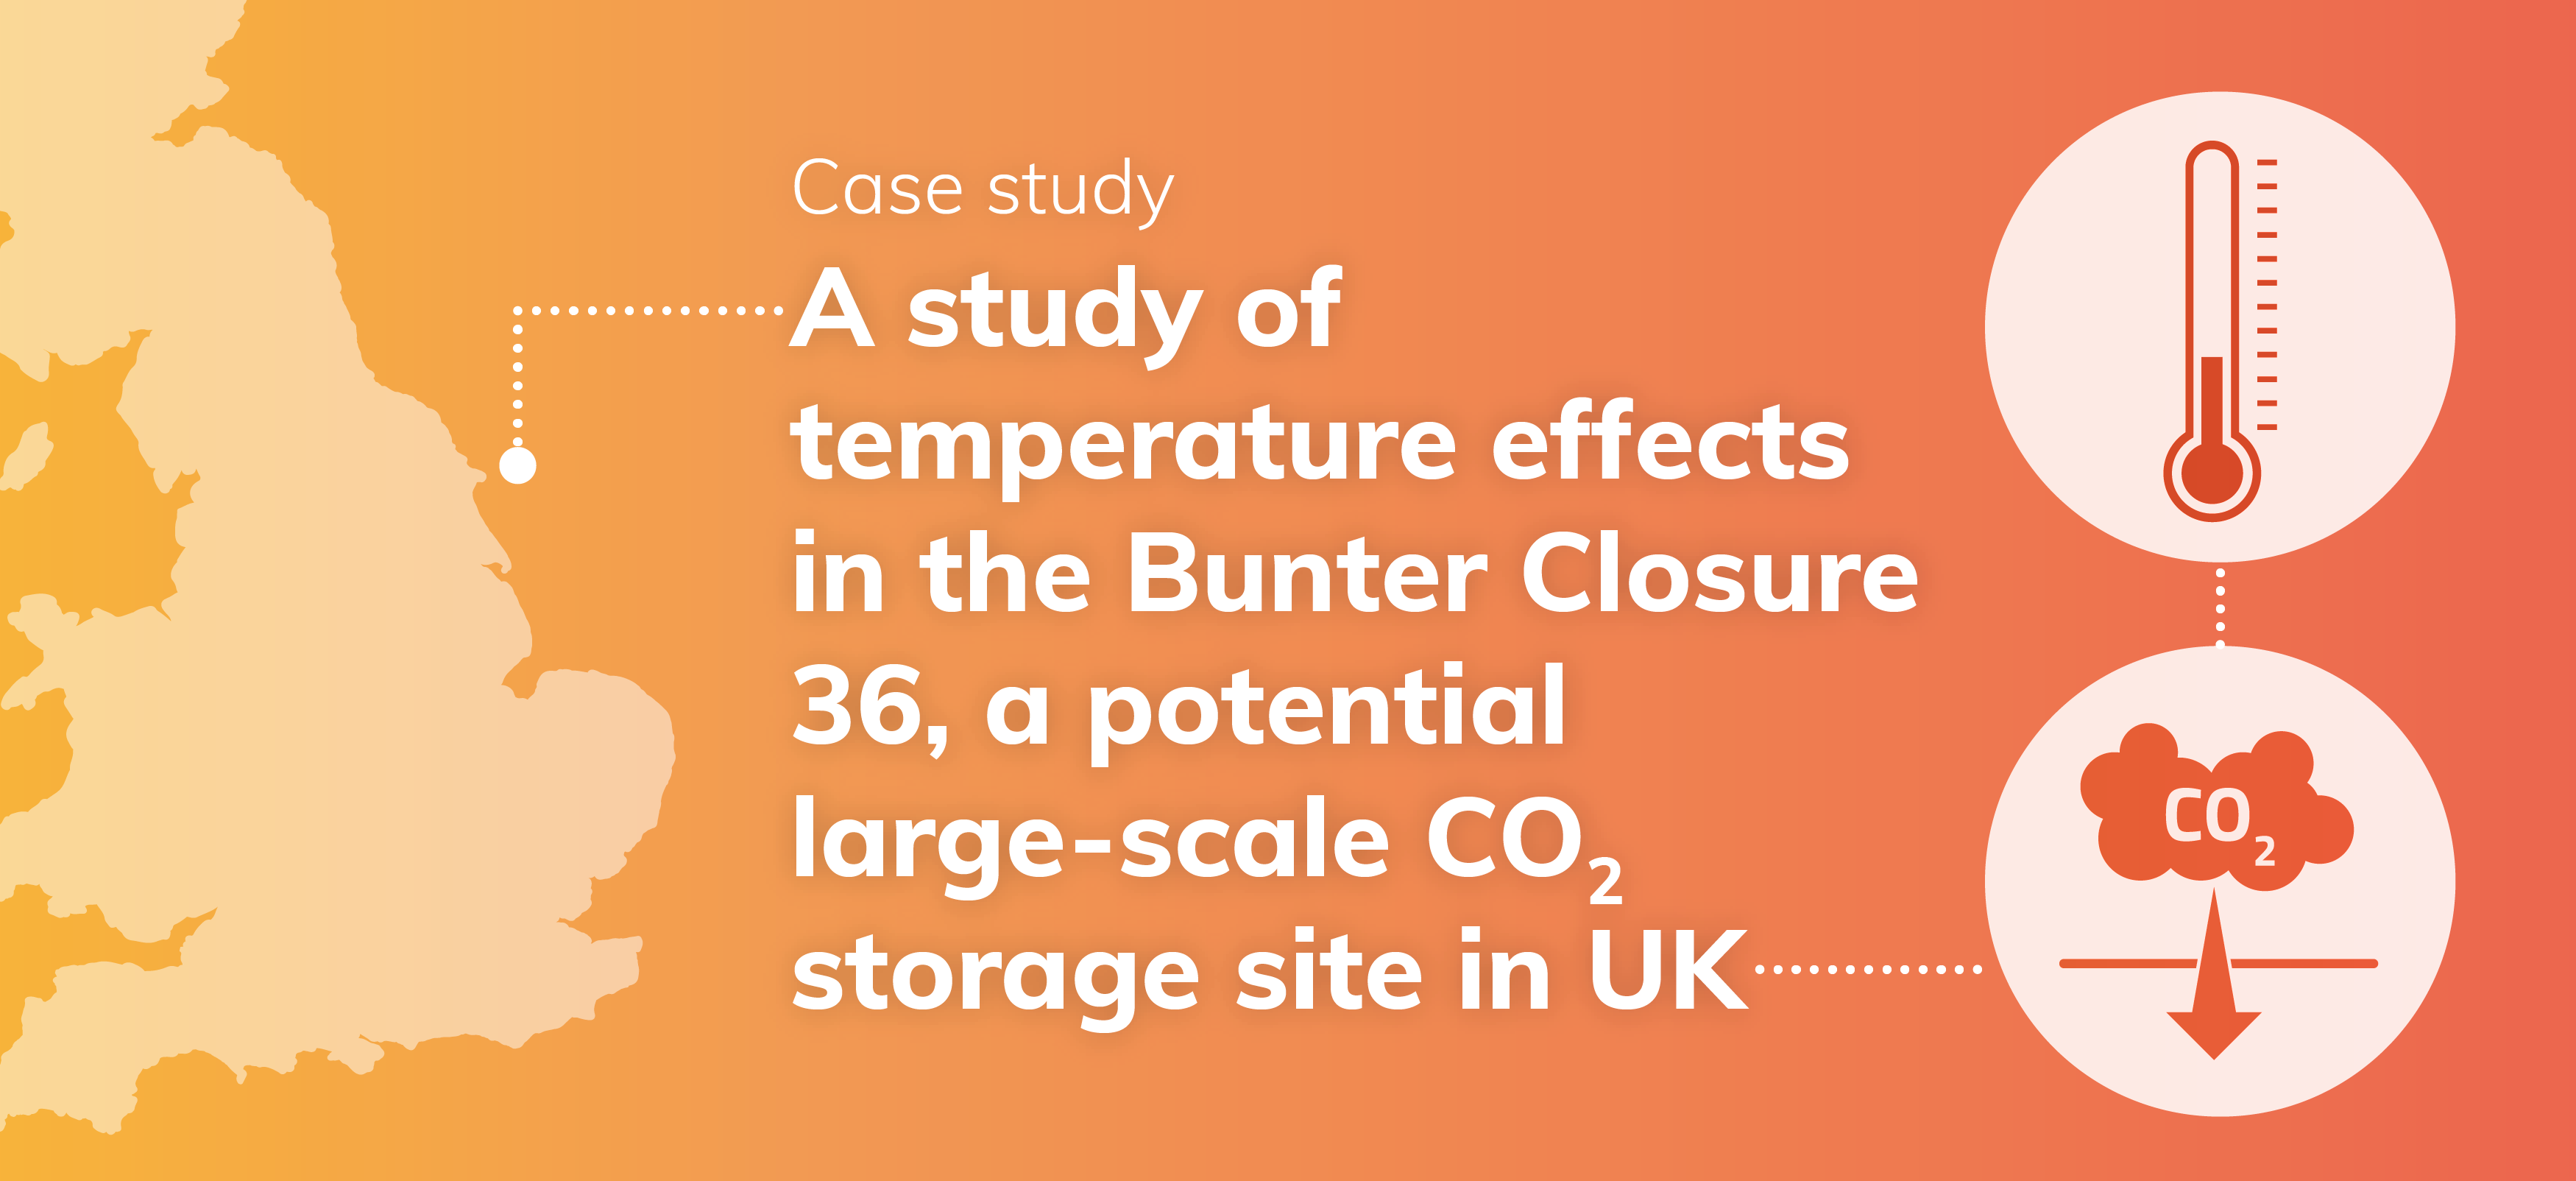 CO2 Storage - case study